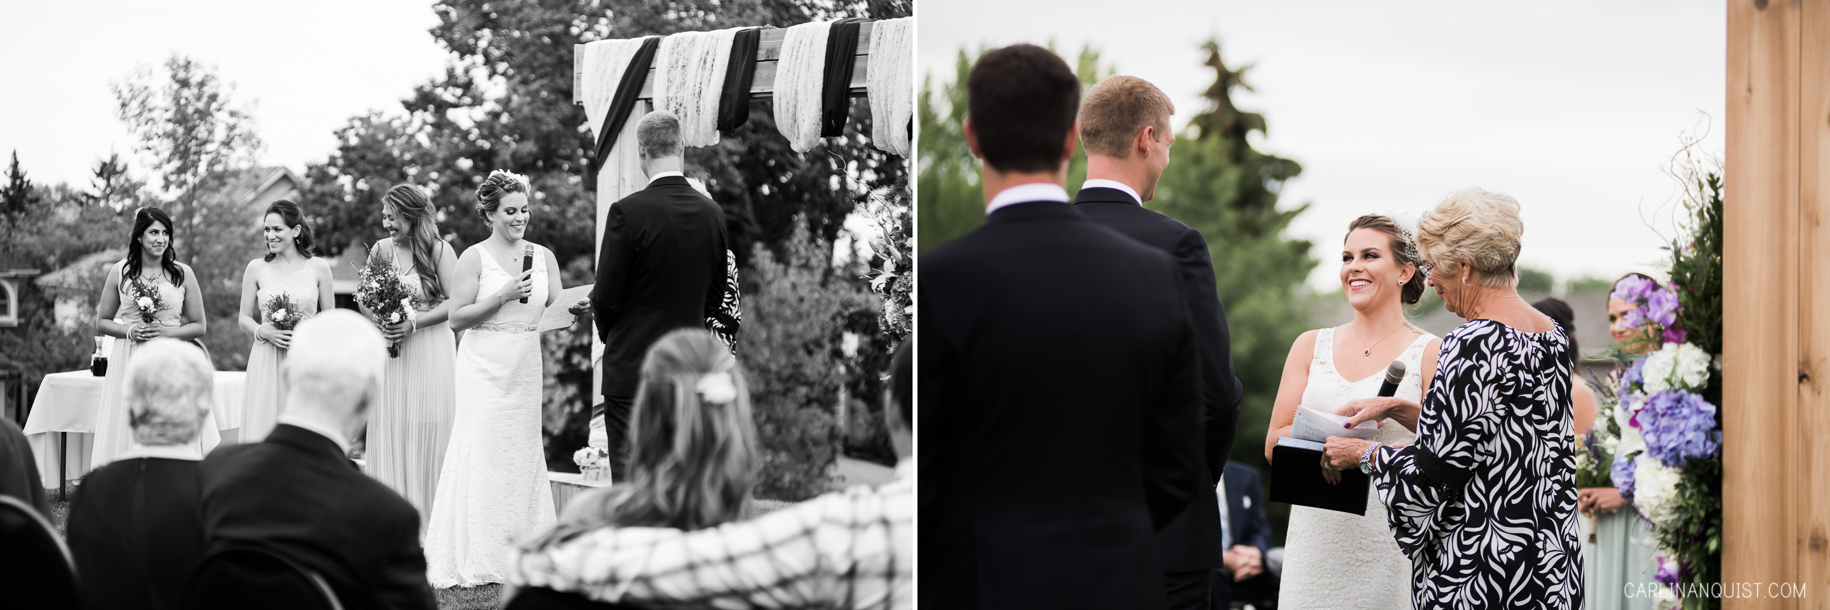 Wedding Vows | Calgary Wedding Photographer